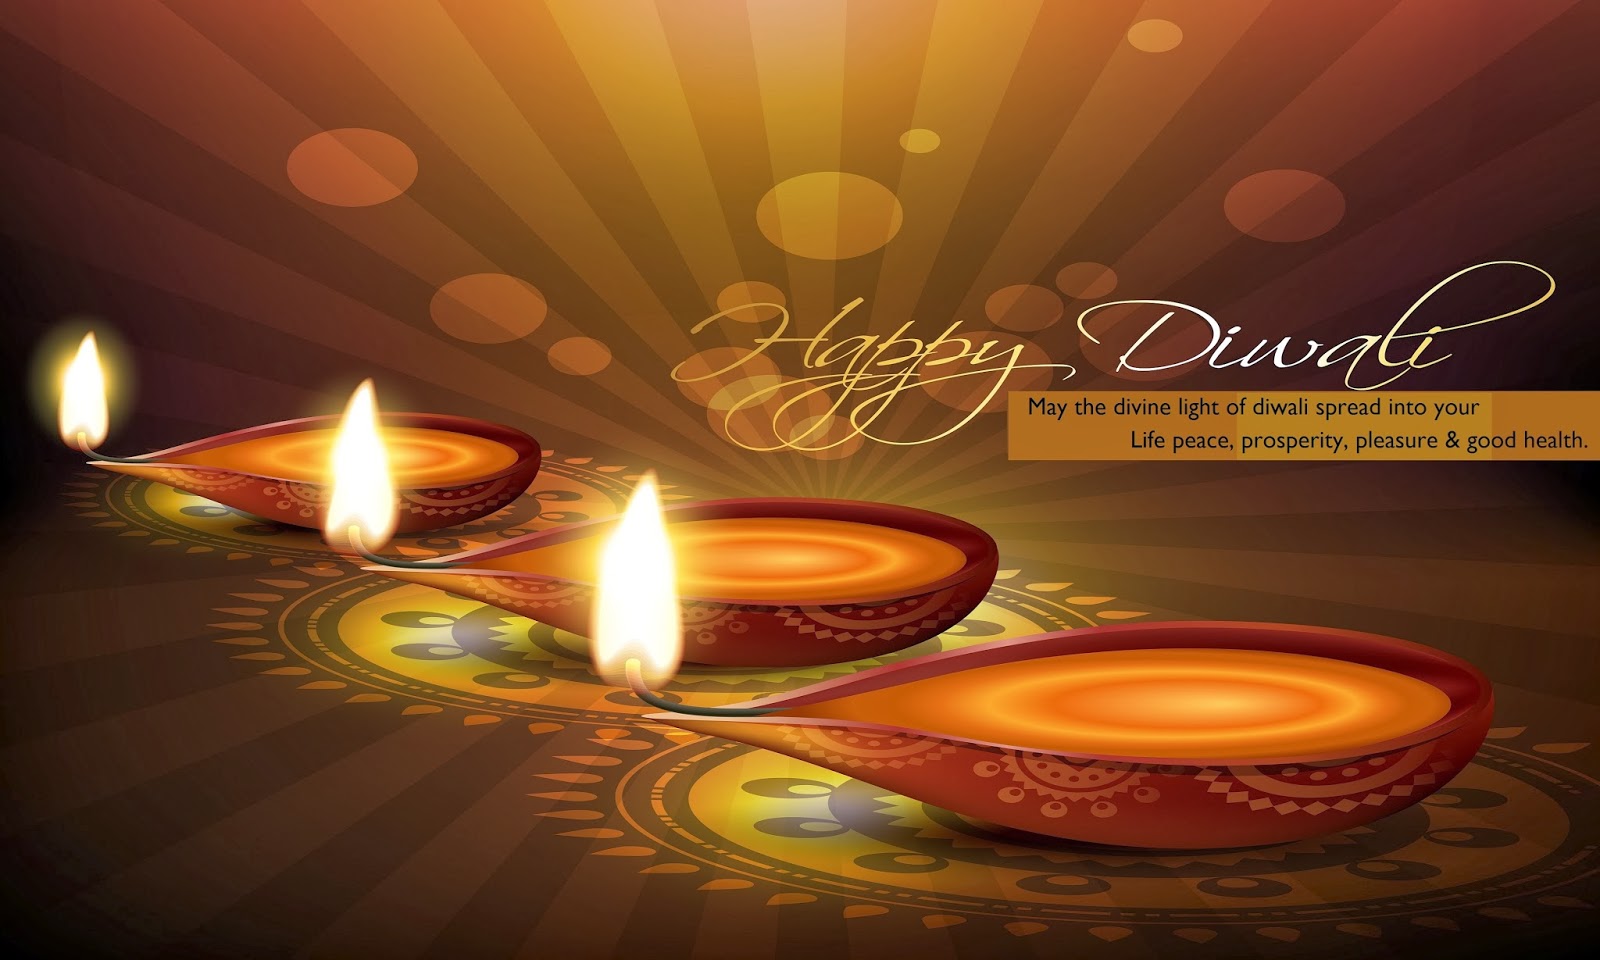 diwali wishes wallpaper,diwali,lighting,holiday,event,oil lamp